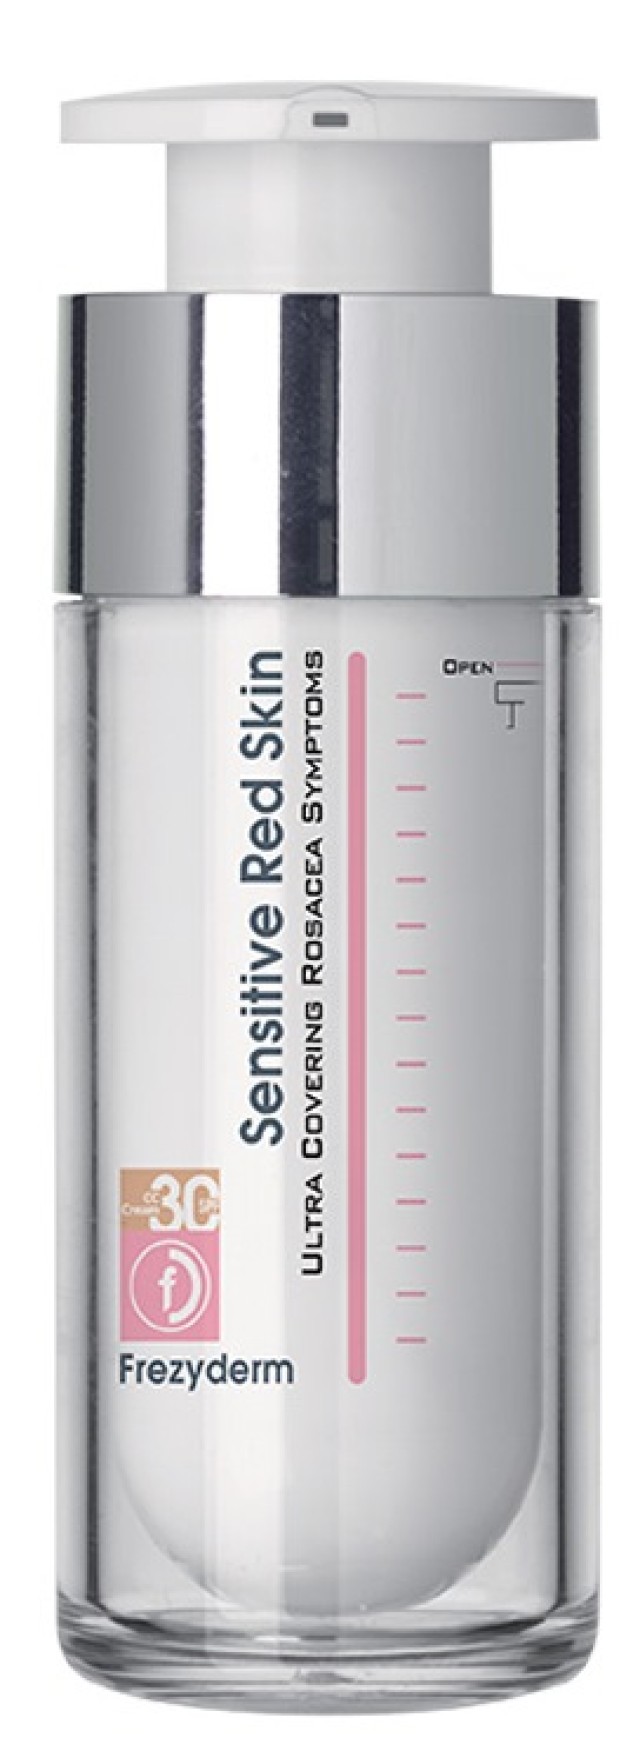 Frezyderm Sensitive Red Skin Tinted Cream Spf30 30 ml product photo